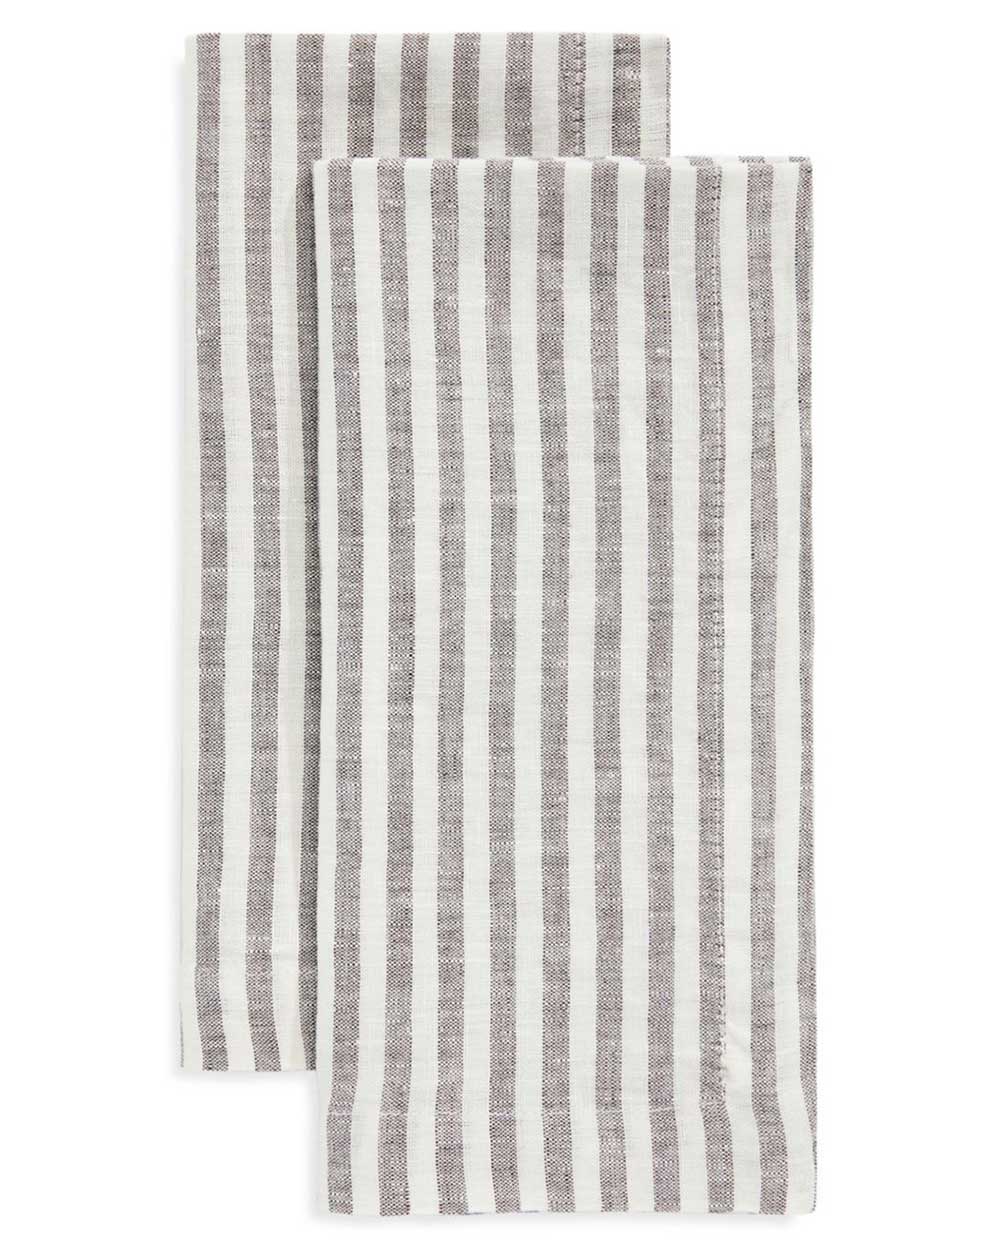 GlucksteinHome Lafayette linen napkins